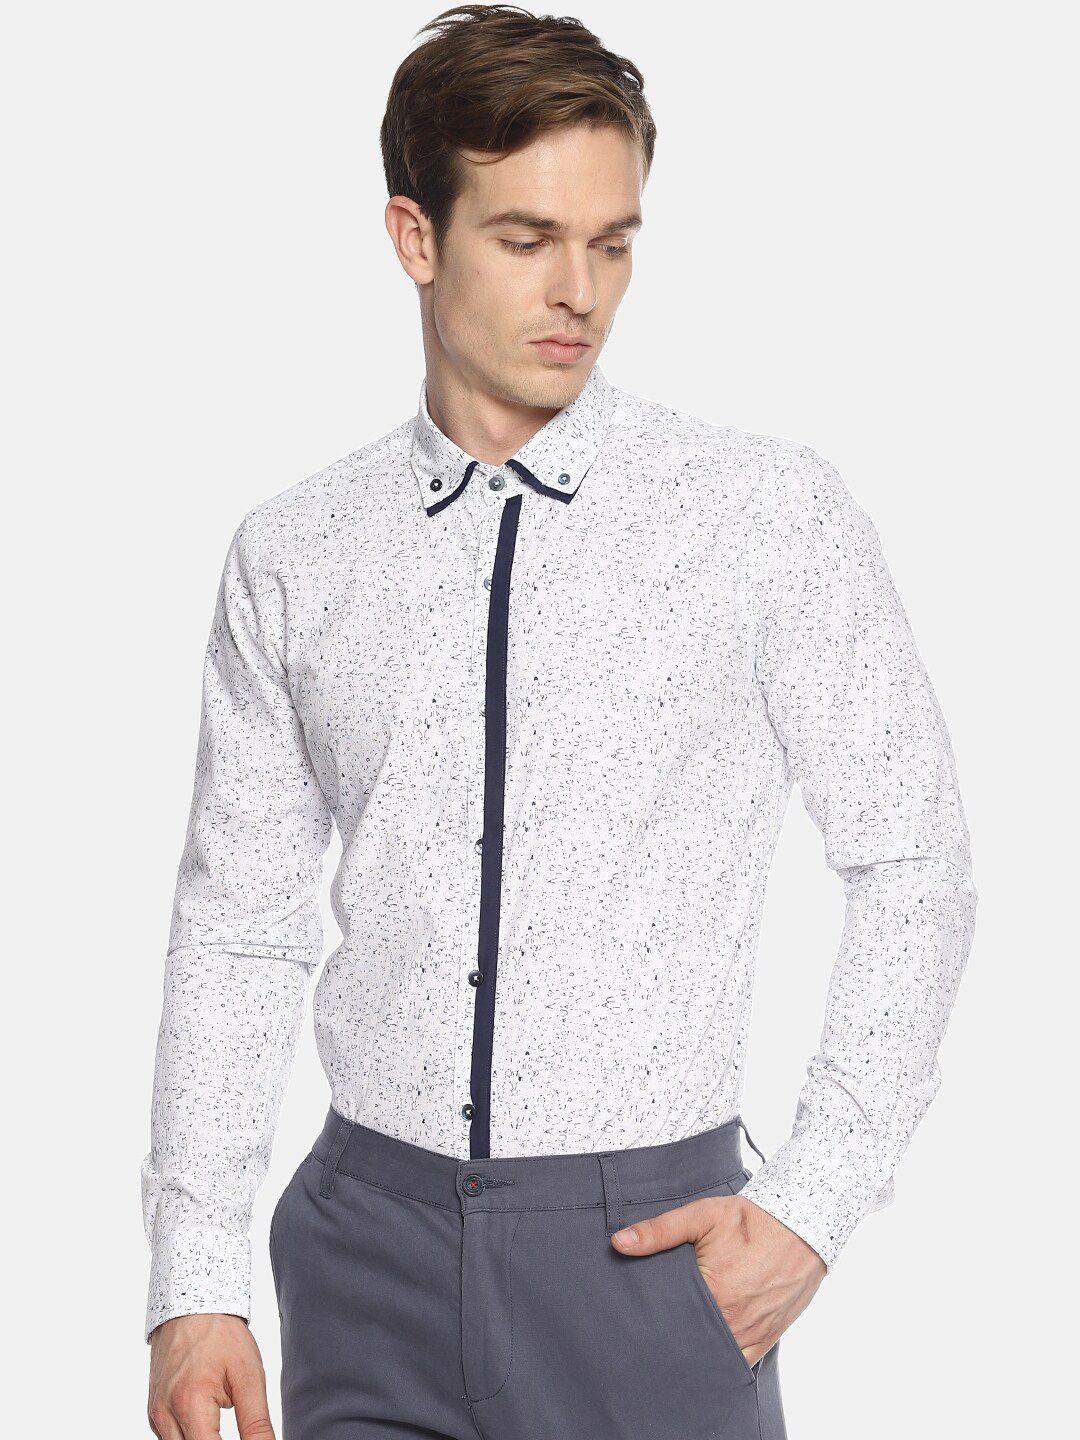 couper & coll men white premium slim fit printed casual shirt